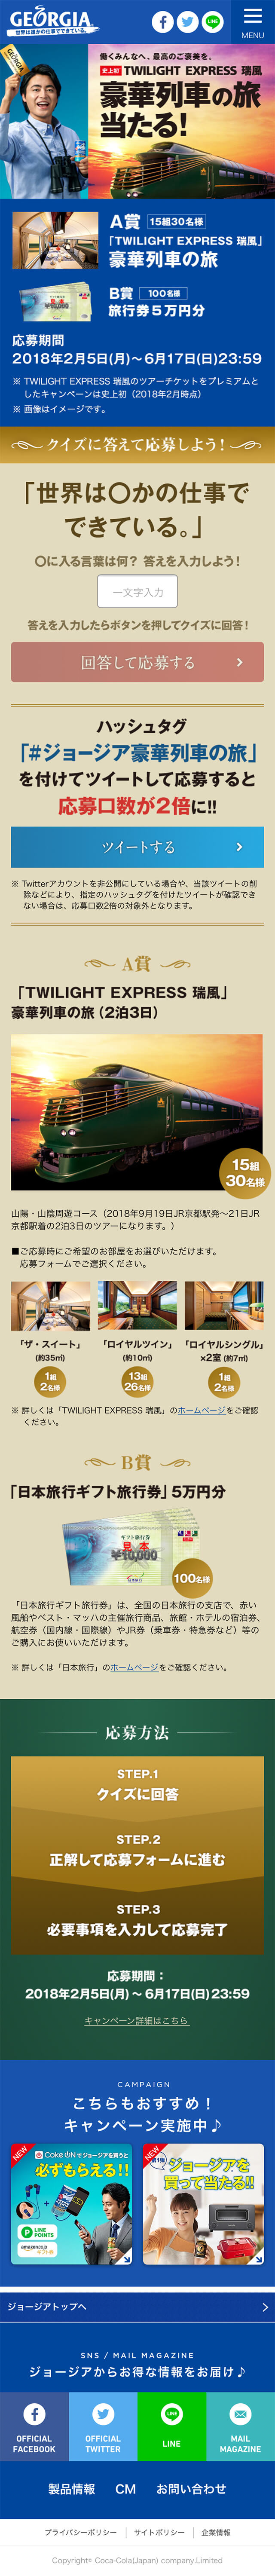 「TWILIGHT EXPRESS 瑞風」豪華列車の旅当たる_sp_1